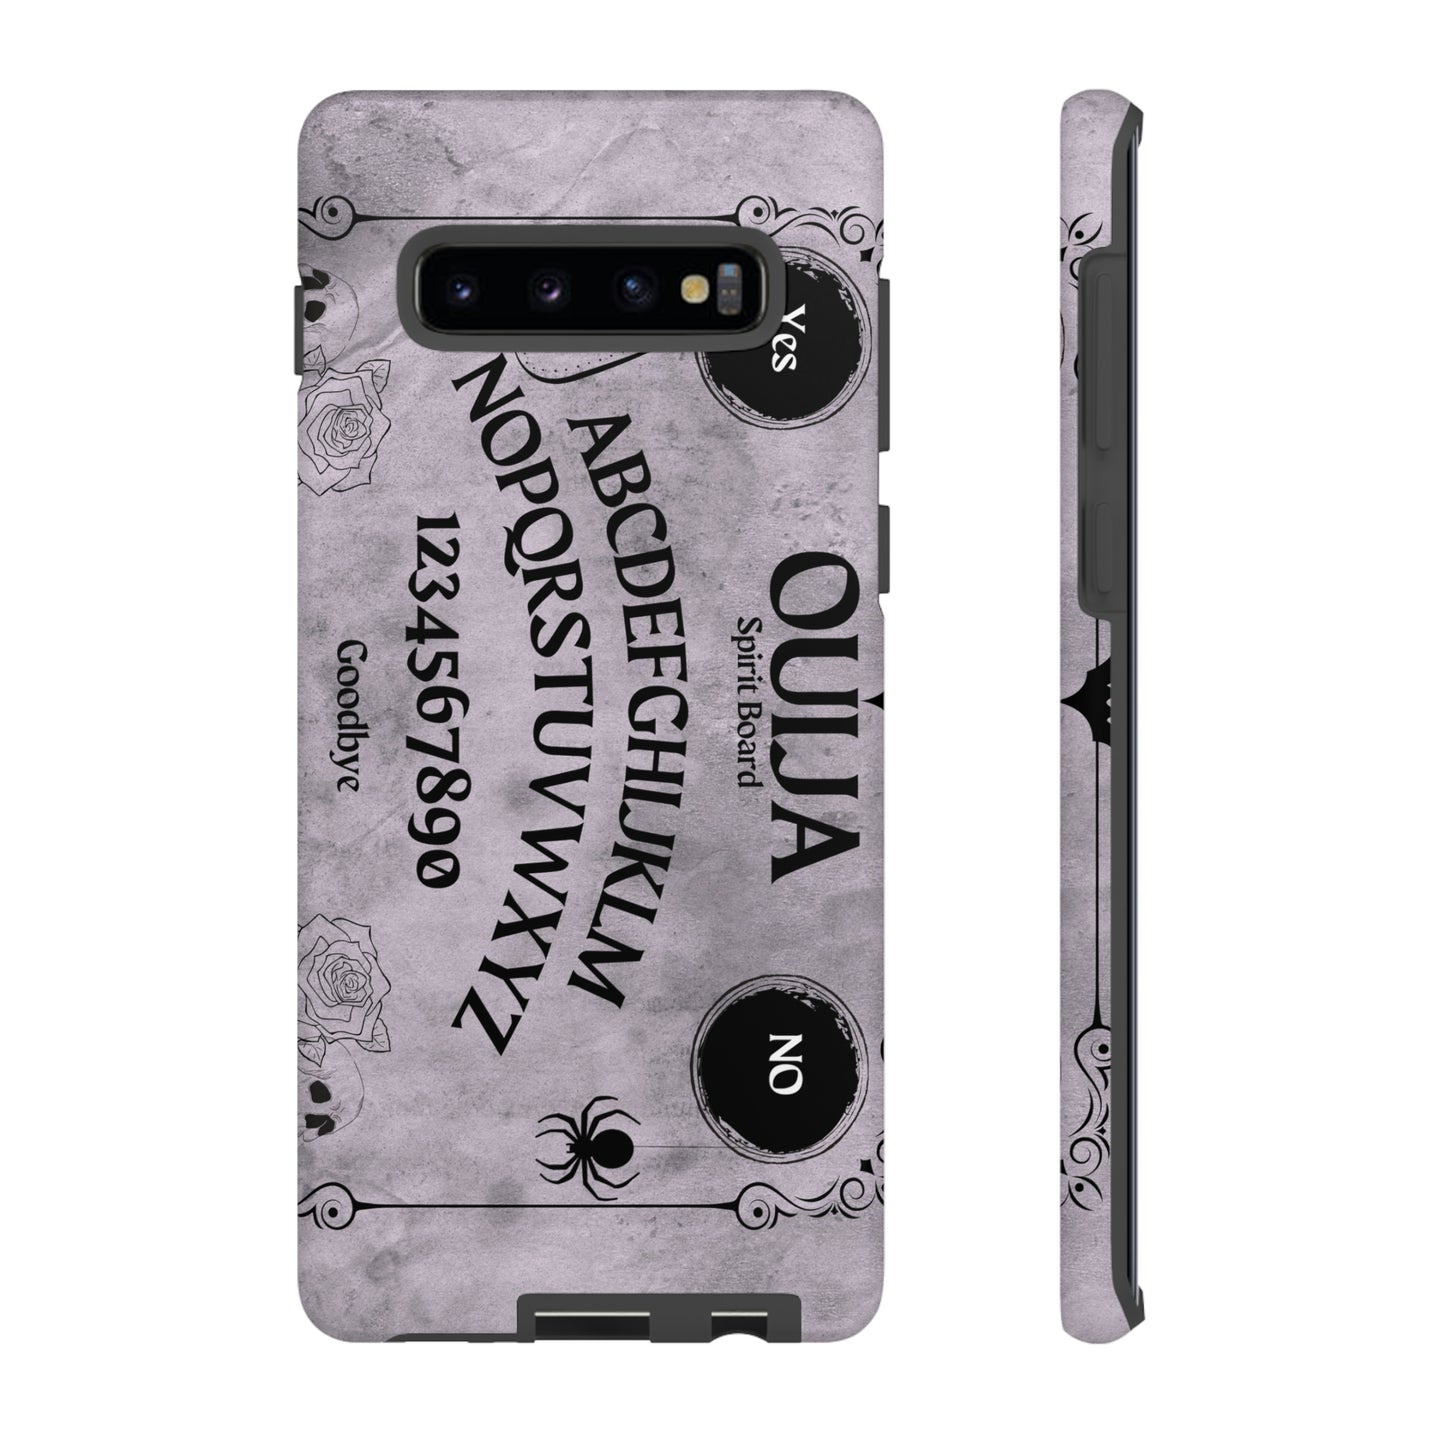 Ouija Board Tough Phone Cases For Samsung iPhone GooglePhone CaseVTZdesignsSamsung Galaxy S10 PlusMatteAccessoriesGlossyhalloween